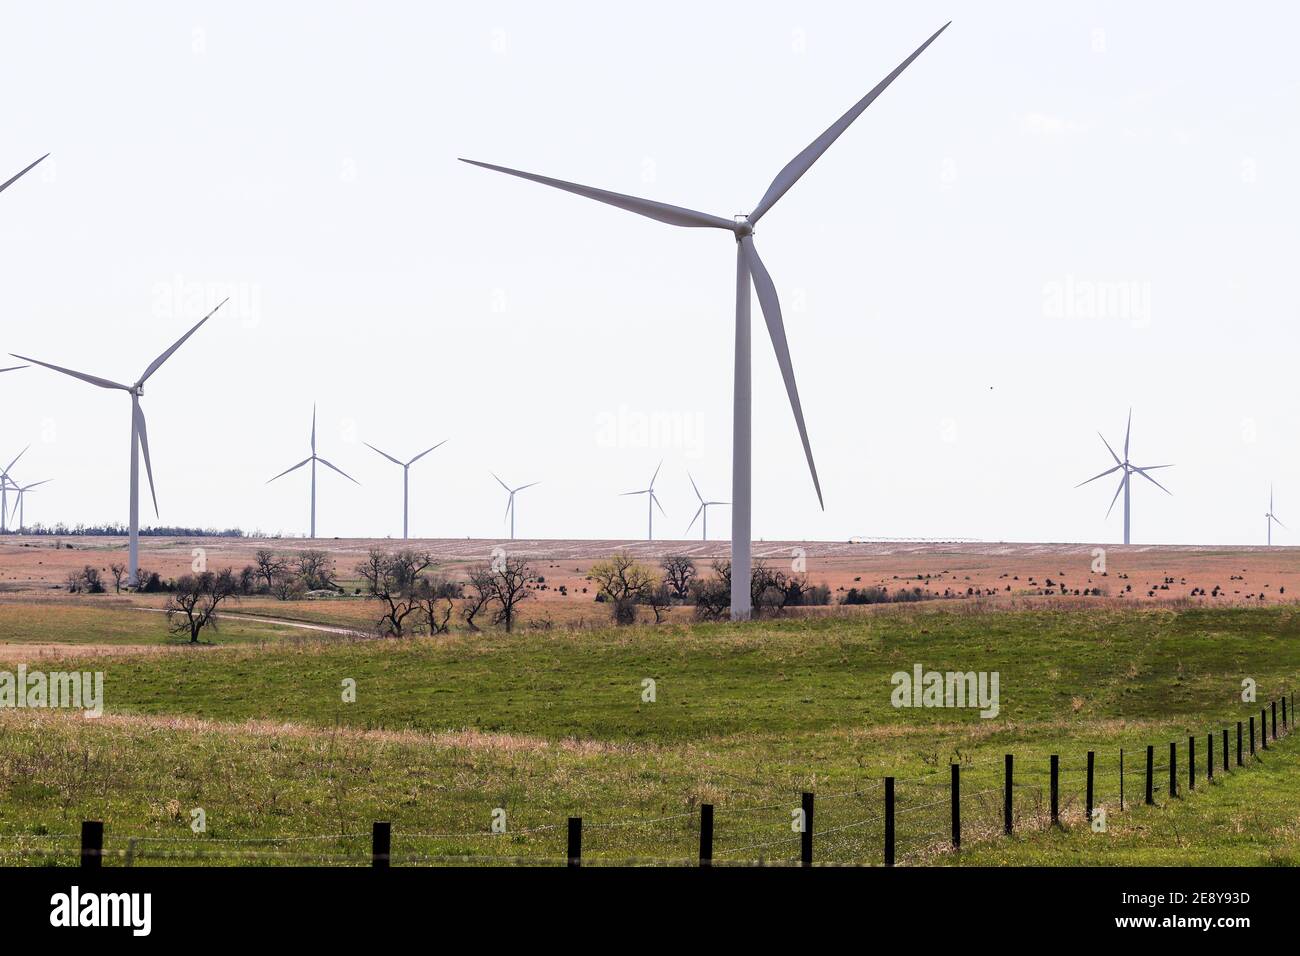 O'Neill, Nebraska, US 22 luglio 2019 Wind Farm in Nebraska Farm Land Wind Power turbine Up Close. Foto di alta qualità Foto Stock